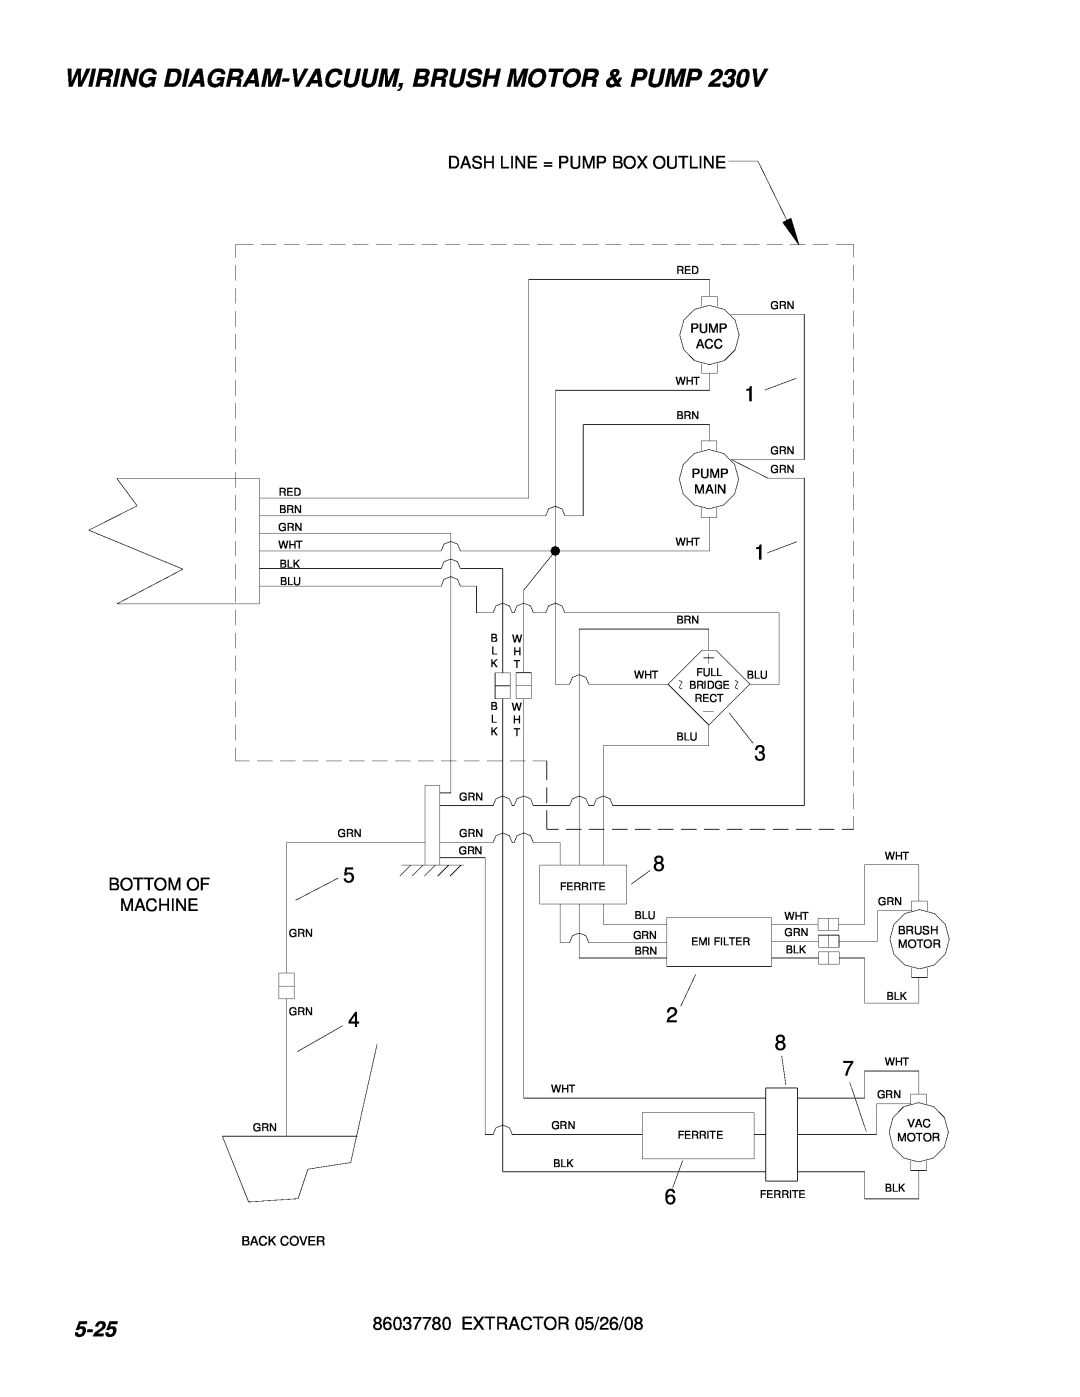 Windsor MPRO AU 10080420, MPRO 10080390 manual 5-25, Wiring Diagram-Vacuum,Brush Motor & Pump, Back Cover, Main, Vac Motor 